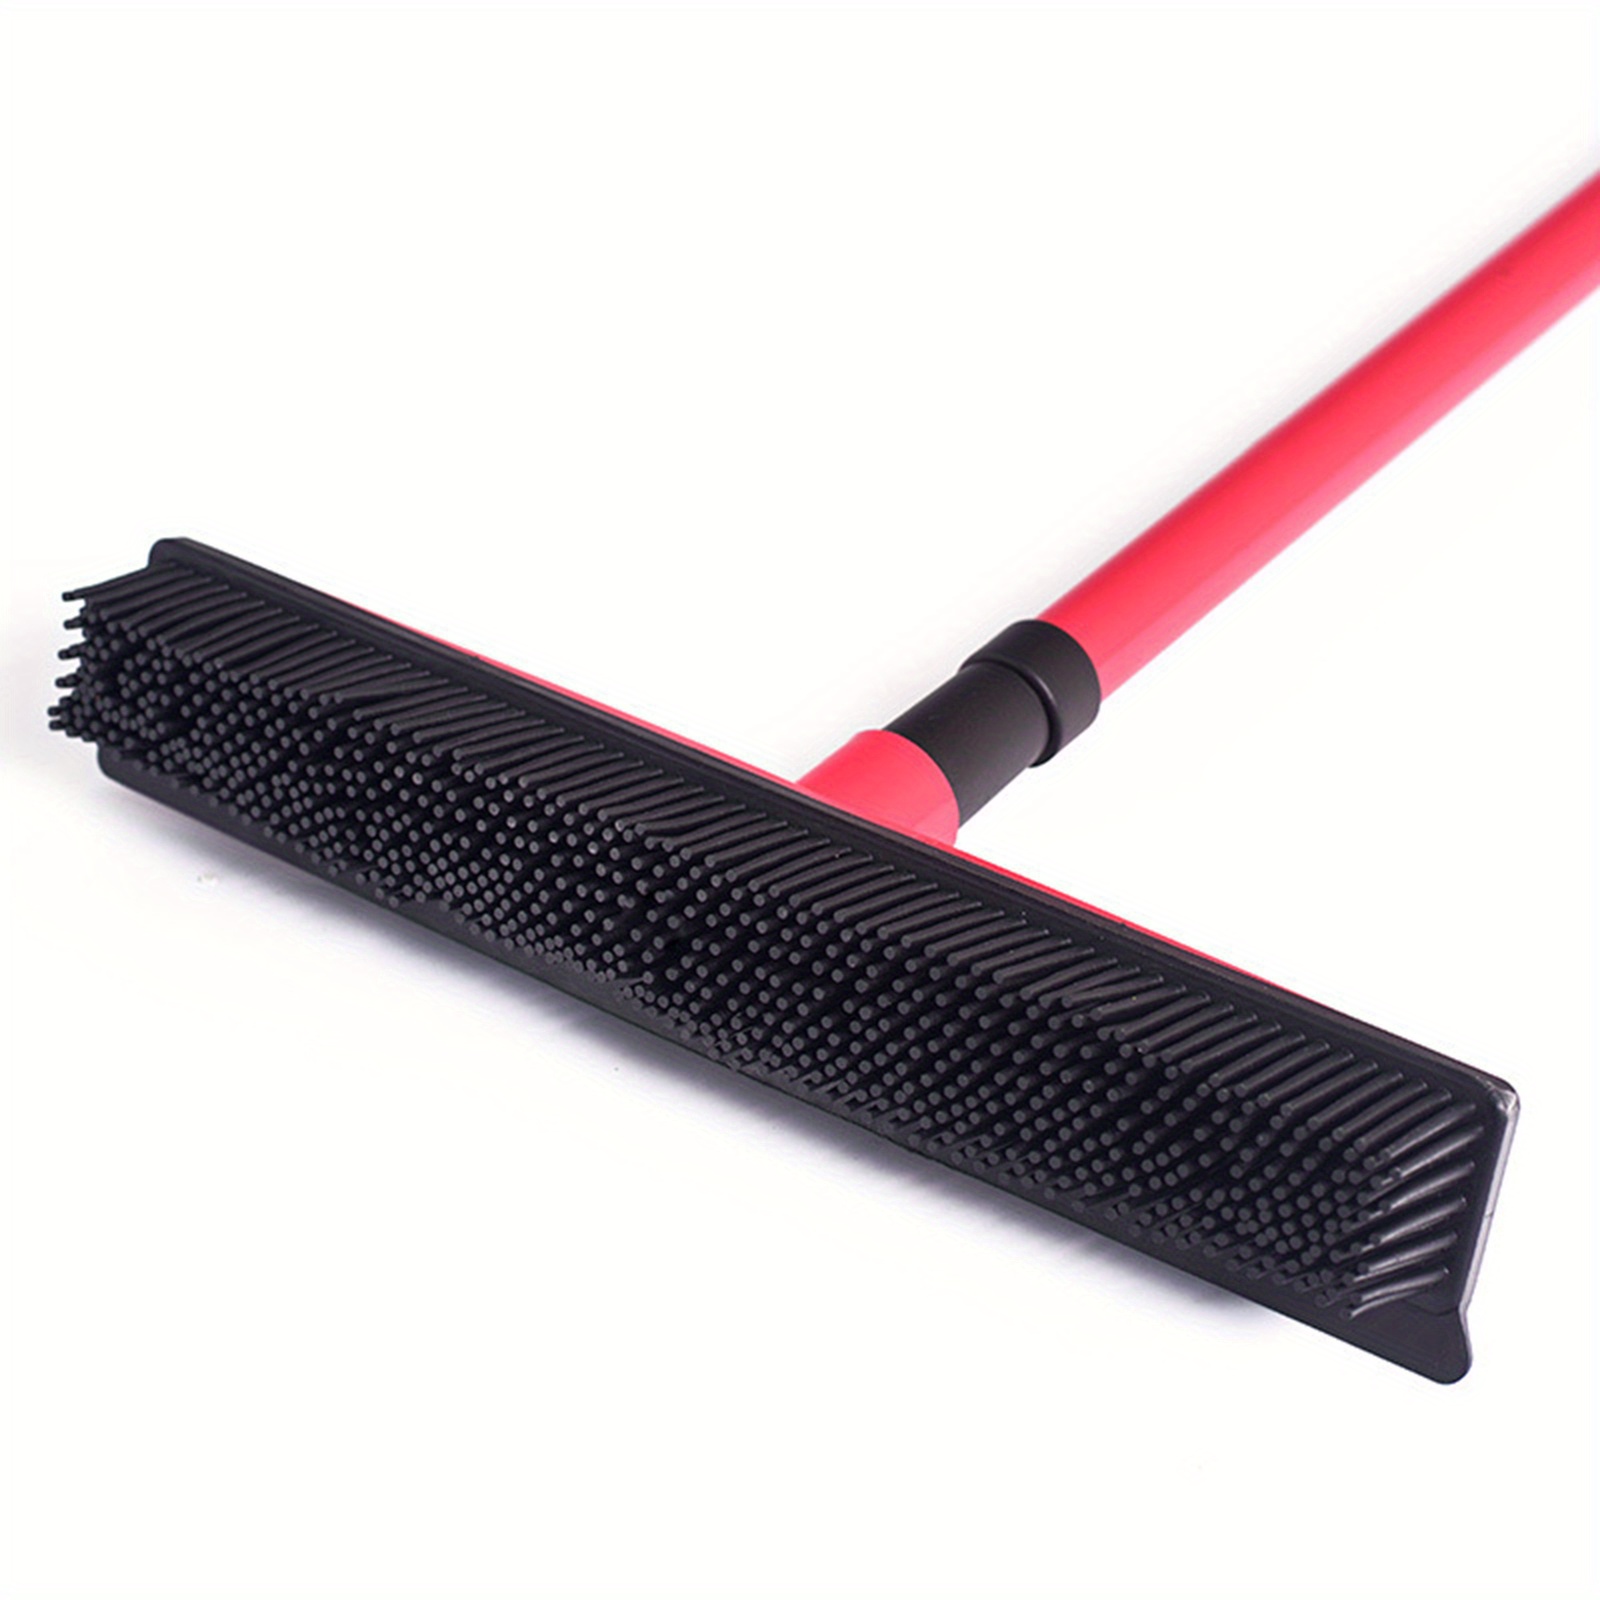 TreeLen Rubber Broom Carpet Rake Pet Hair Remover Broom with Squeegee  Extension Push Broom for Carpet Hardwood Floor Tile Windows Cleaning